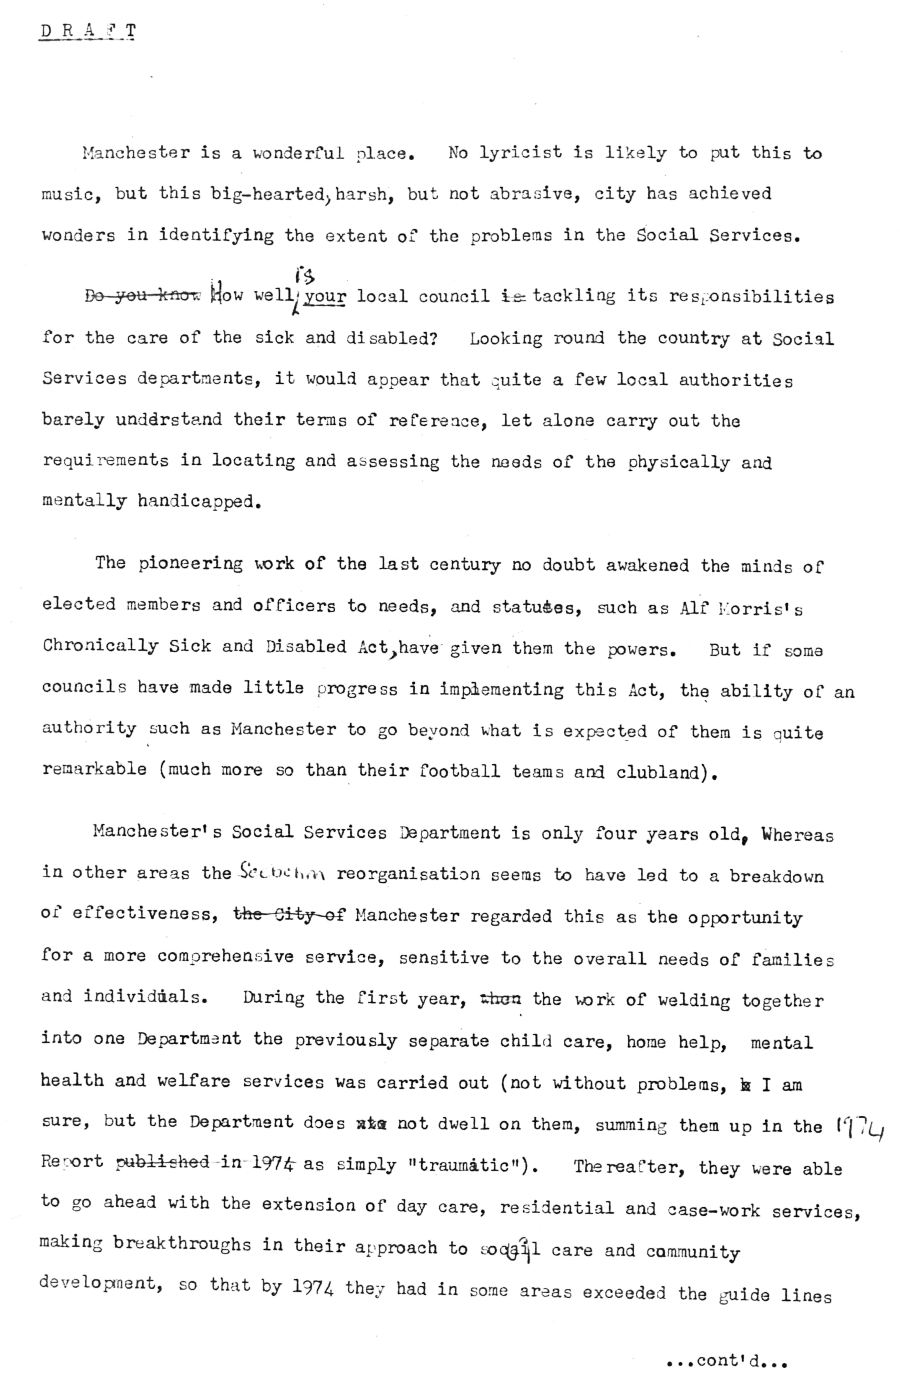 Draft of a speech Alf Morris gave in Manchester, 1971